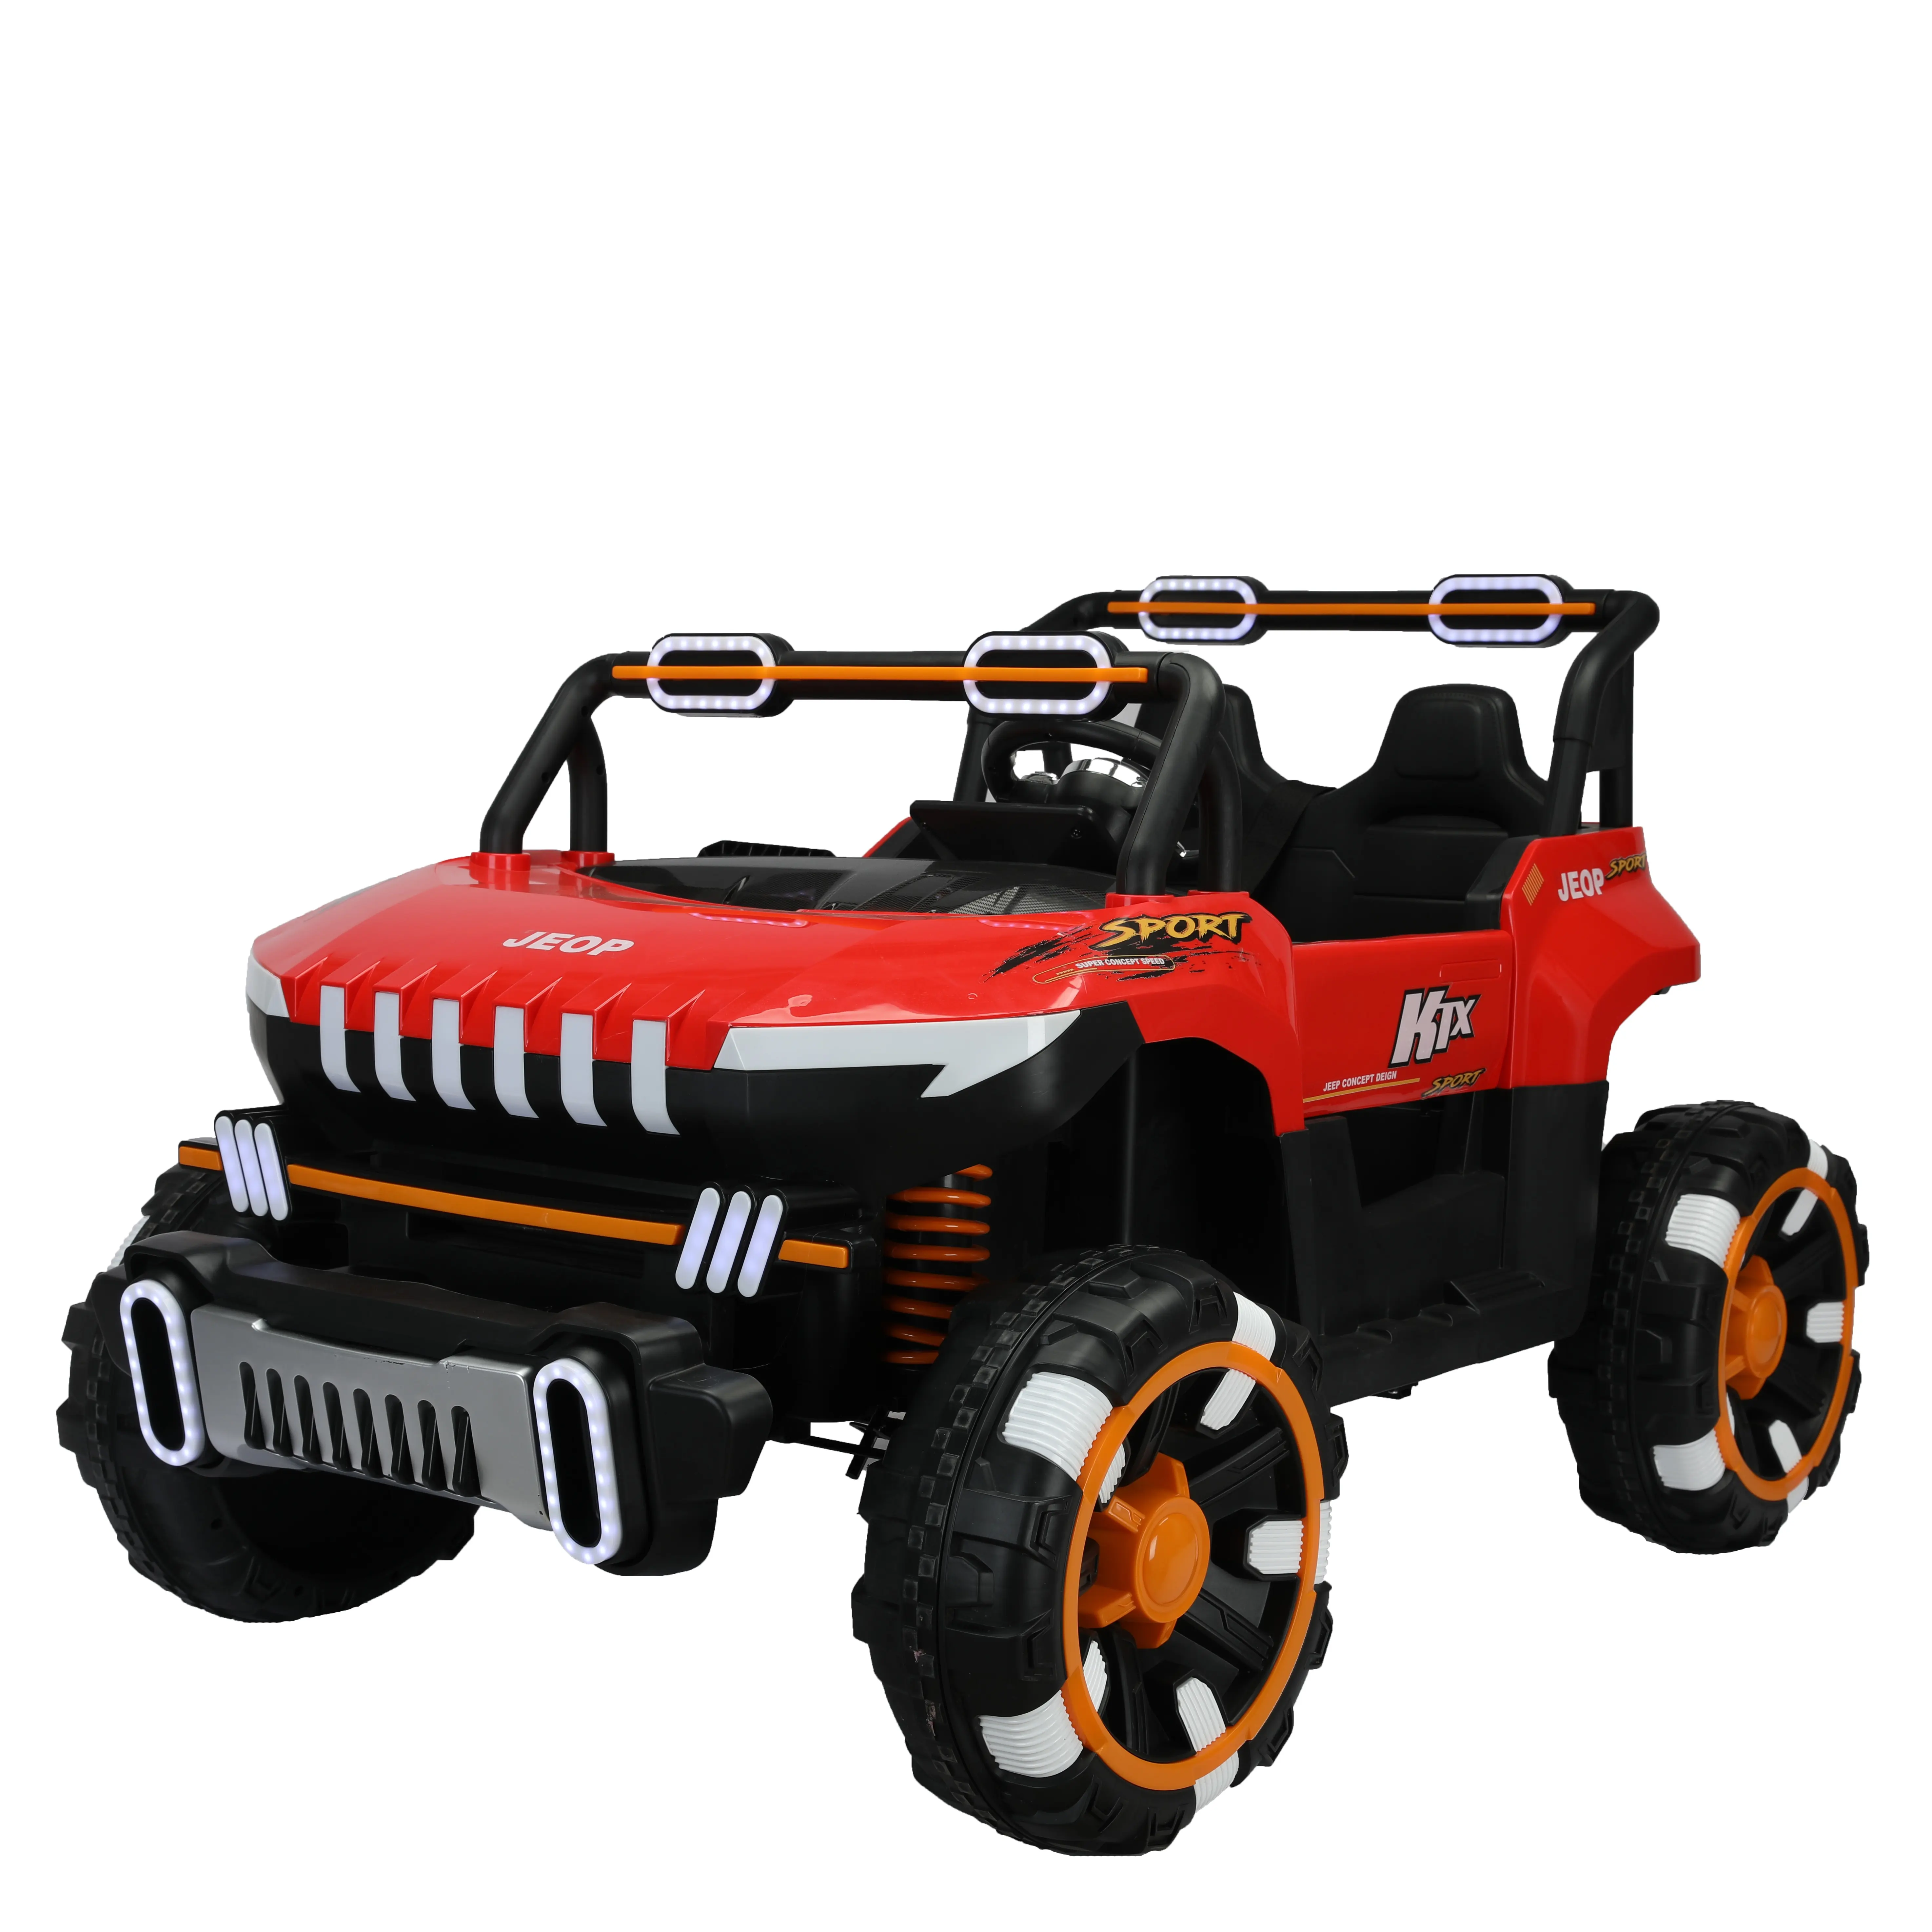 फ़ैक्टरी प्रत्यक्ष बिक्री बच्चों के लिए रबर टायर के साथ इलेक्ट्रिक चार-पहिया खिलौना राइड-ऑन कार